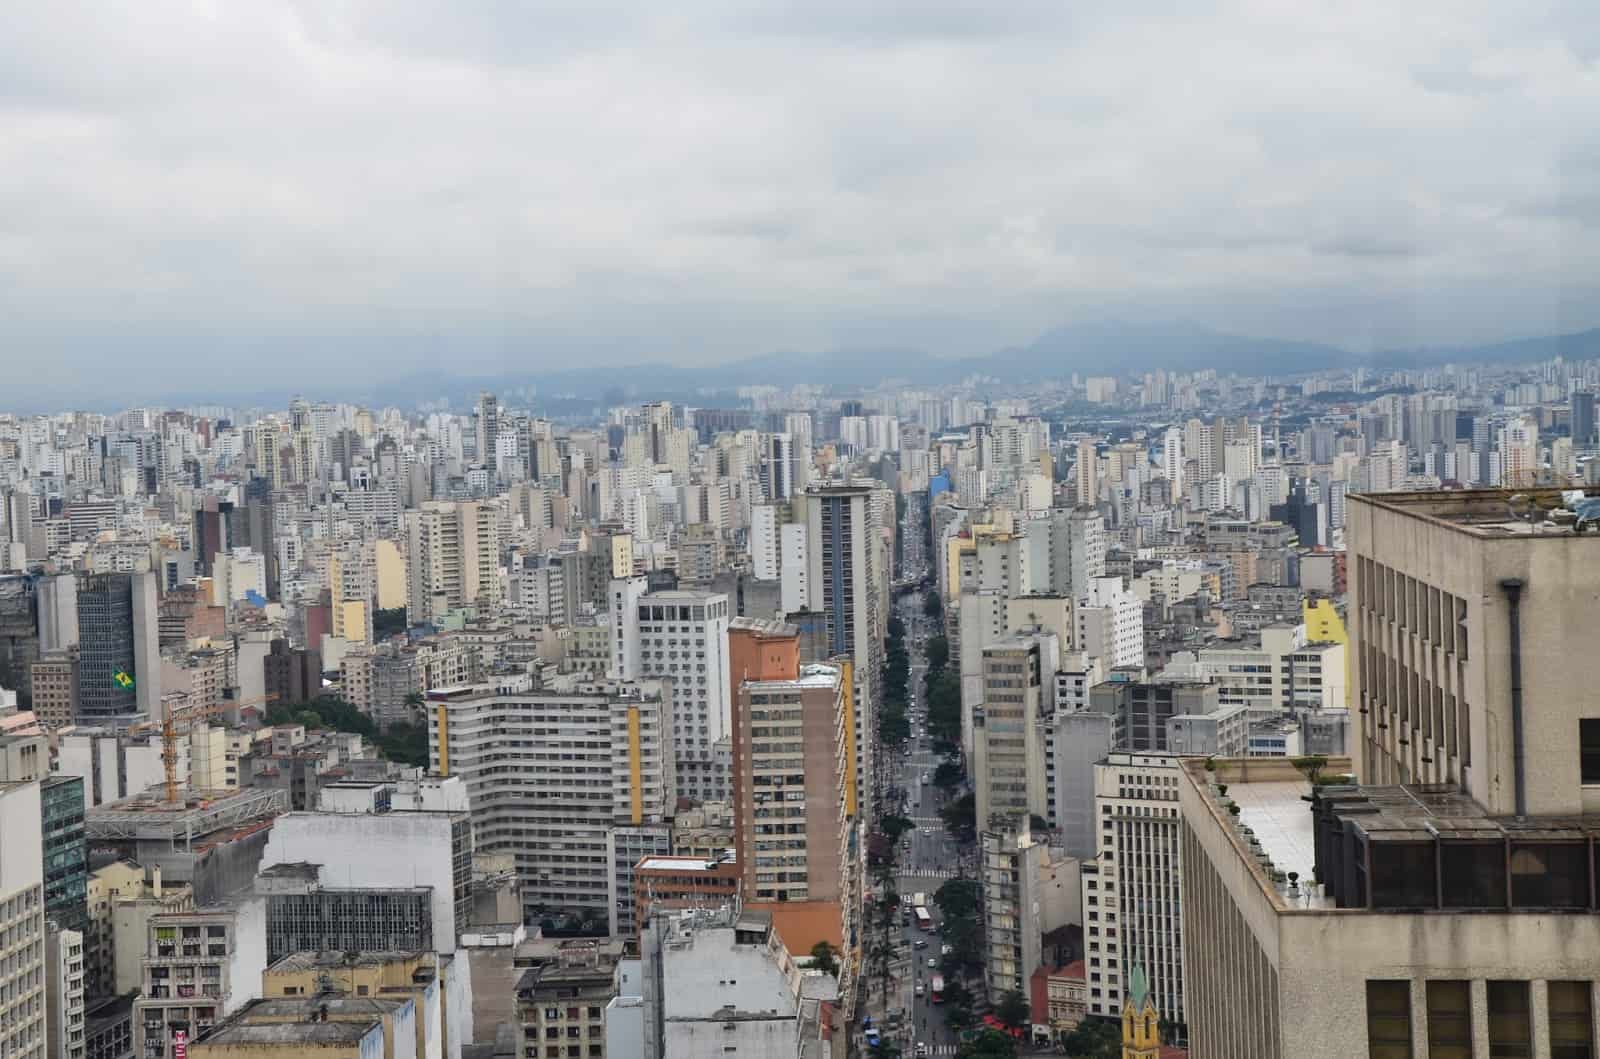 The view from Edifício Altino Arantes in São Paulo, Brazil